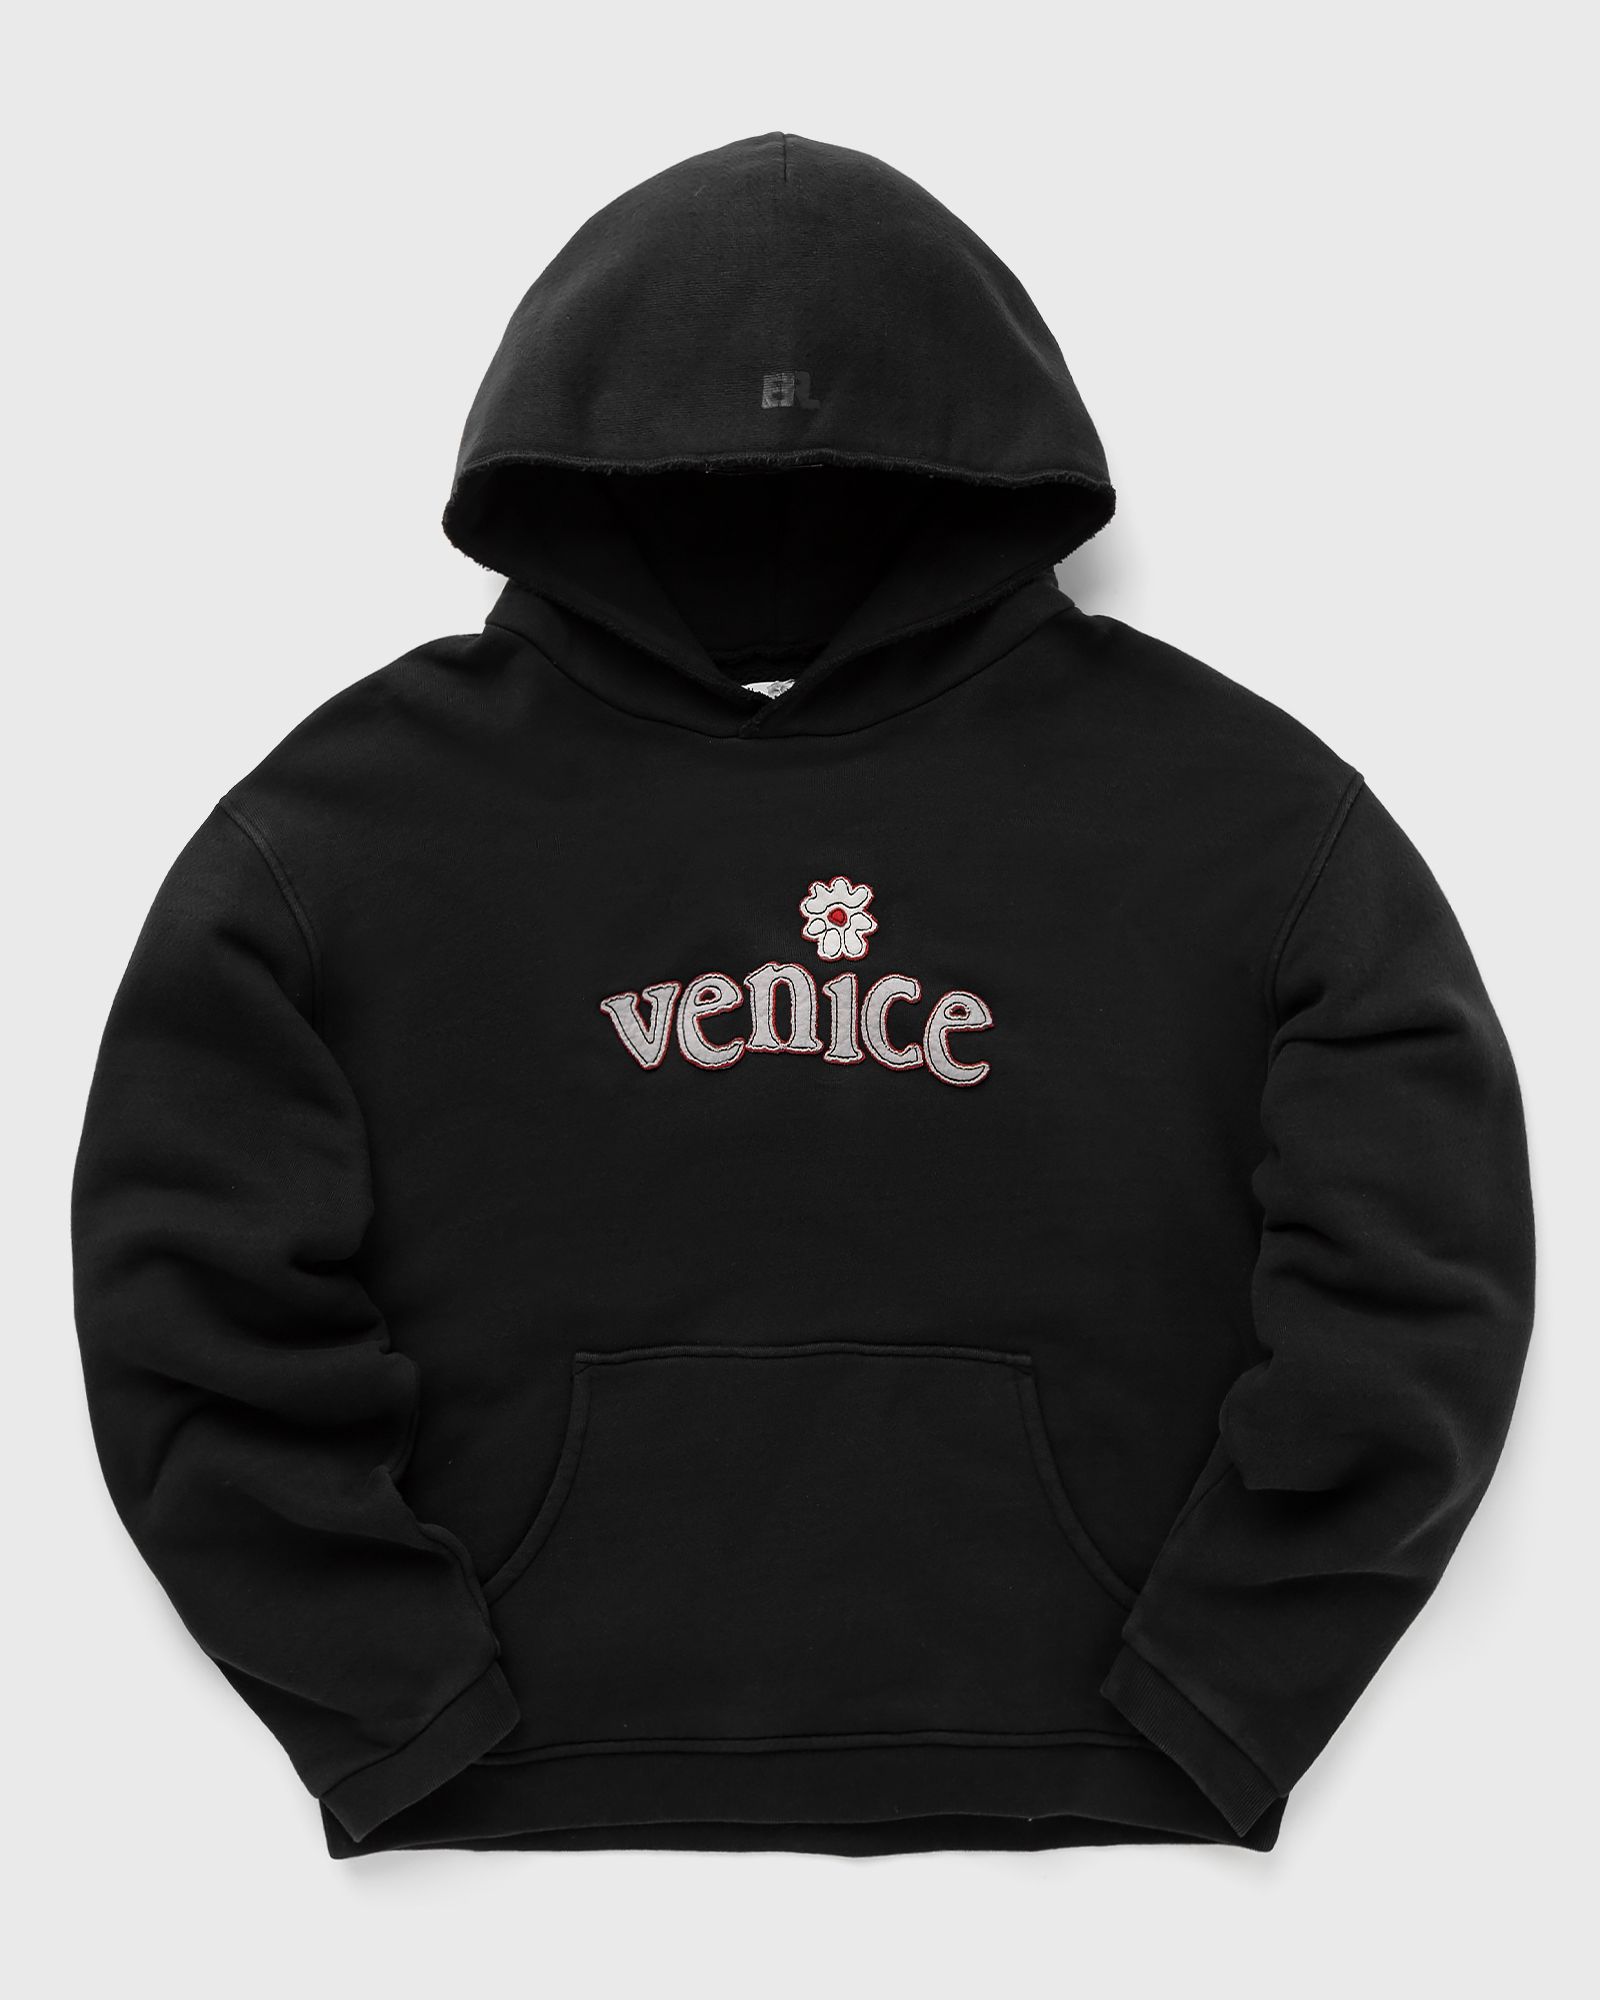 ERL - venice patch hoodie knit men hoodies black in größe:xl